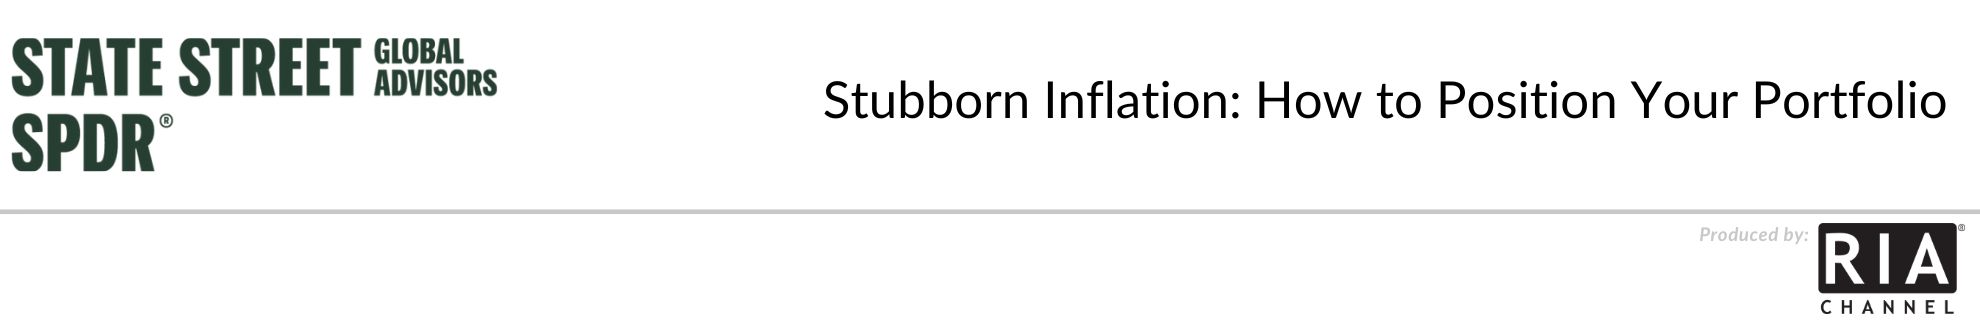 Stubborn Inflation: How to Position Your Portfolio